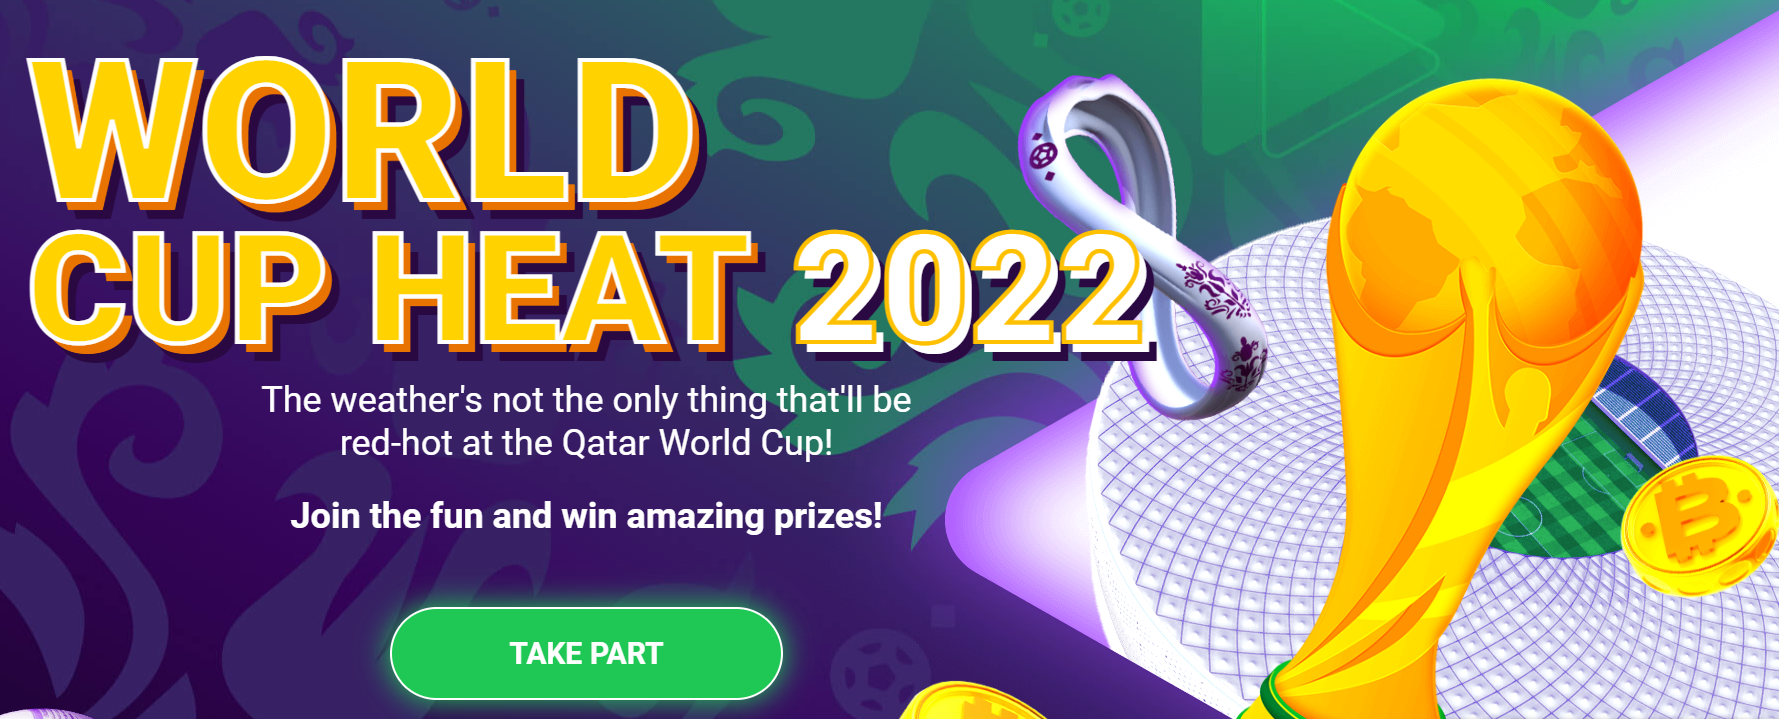 Coinplay World Cup Heat 2022 Bonus